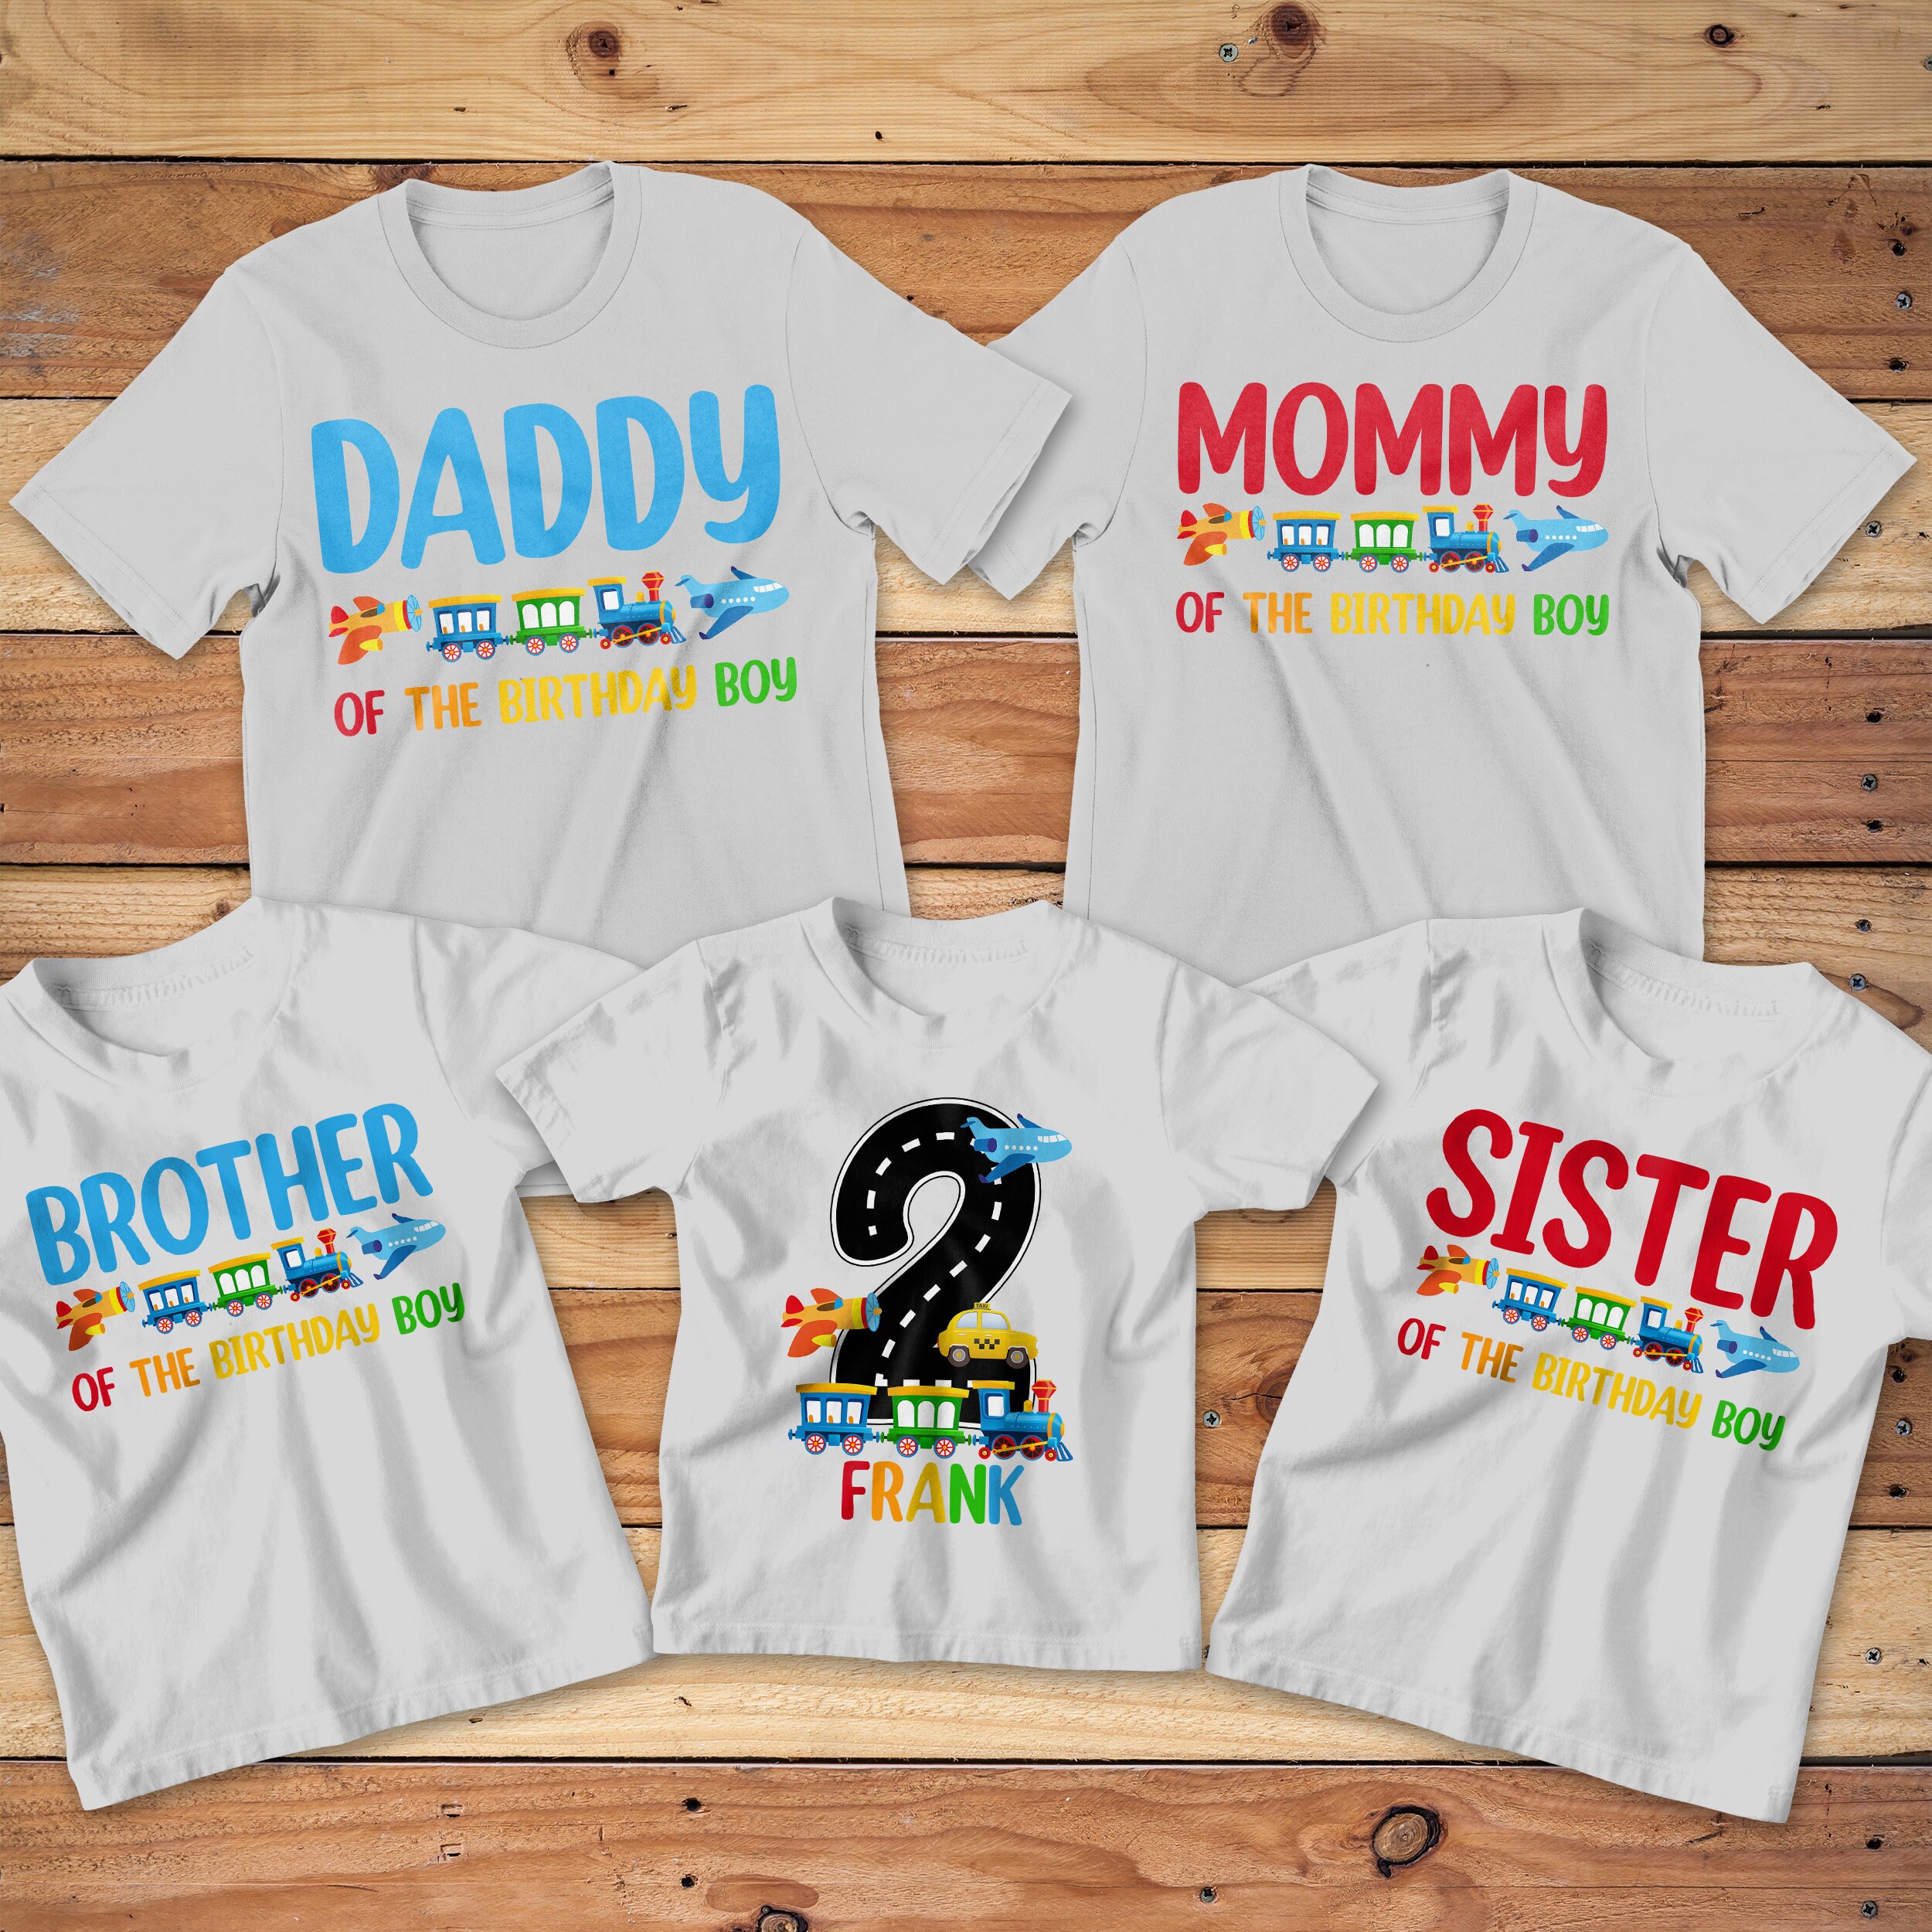 Happy Birthday Printed White T-shirts for Kids Boys & Girls